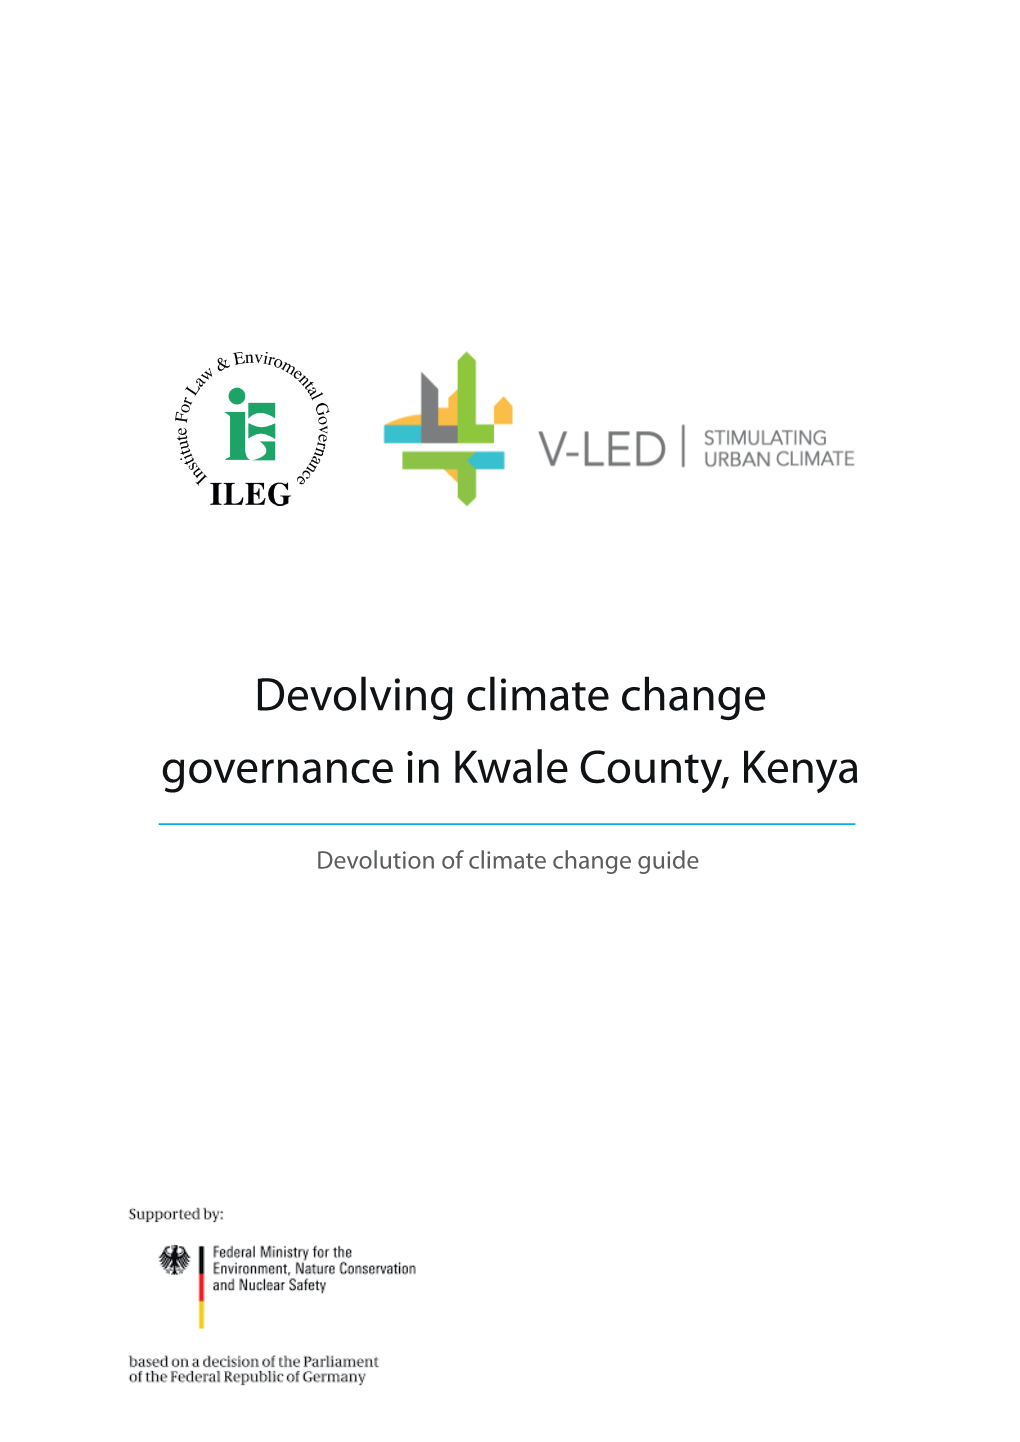 Devolving Climate Change Governance in Kwale County, Kenya